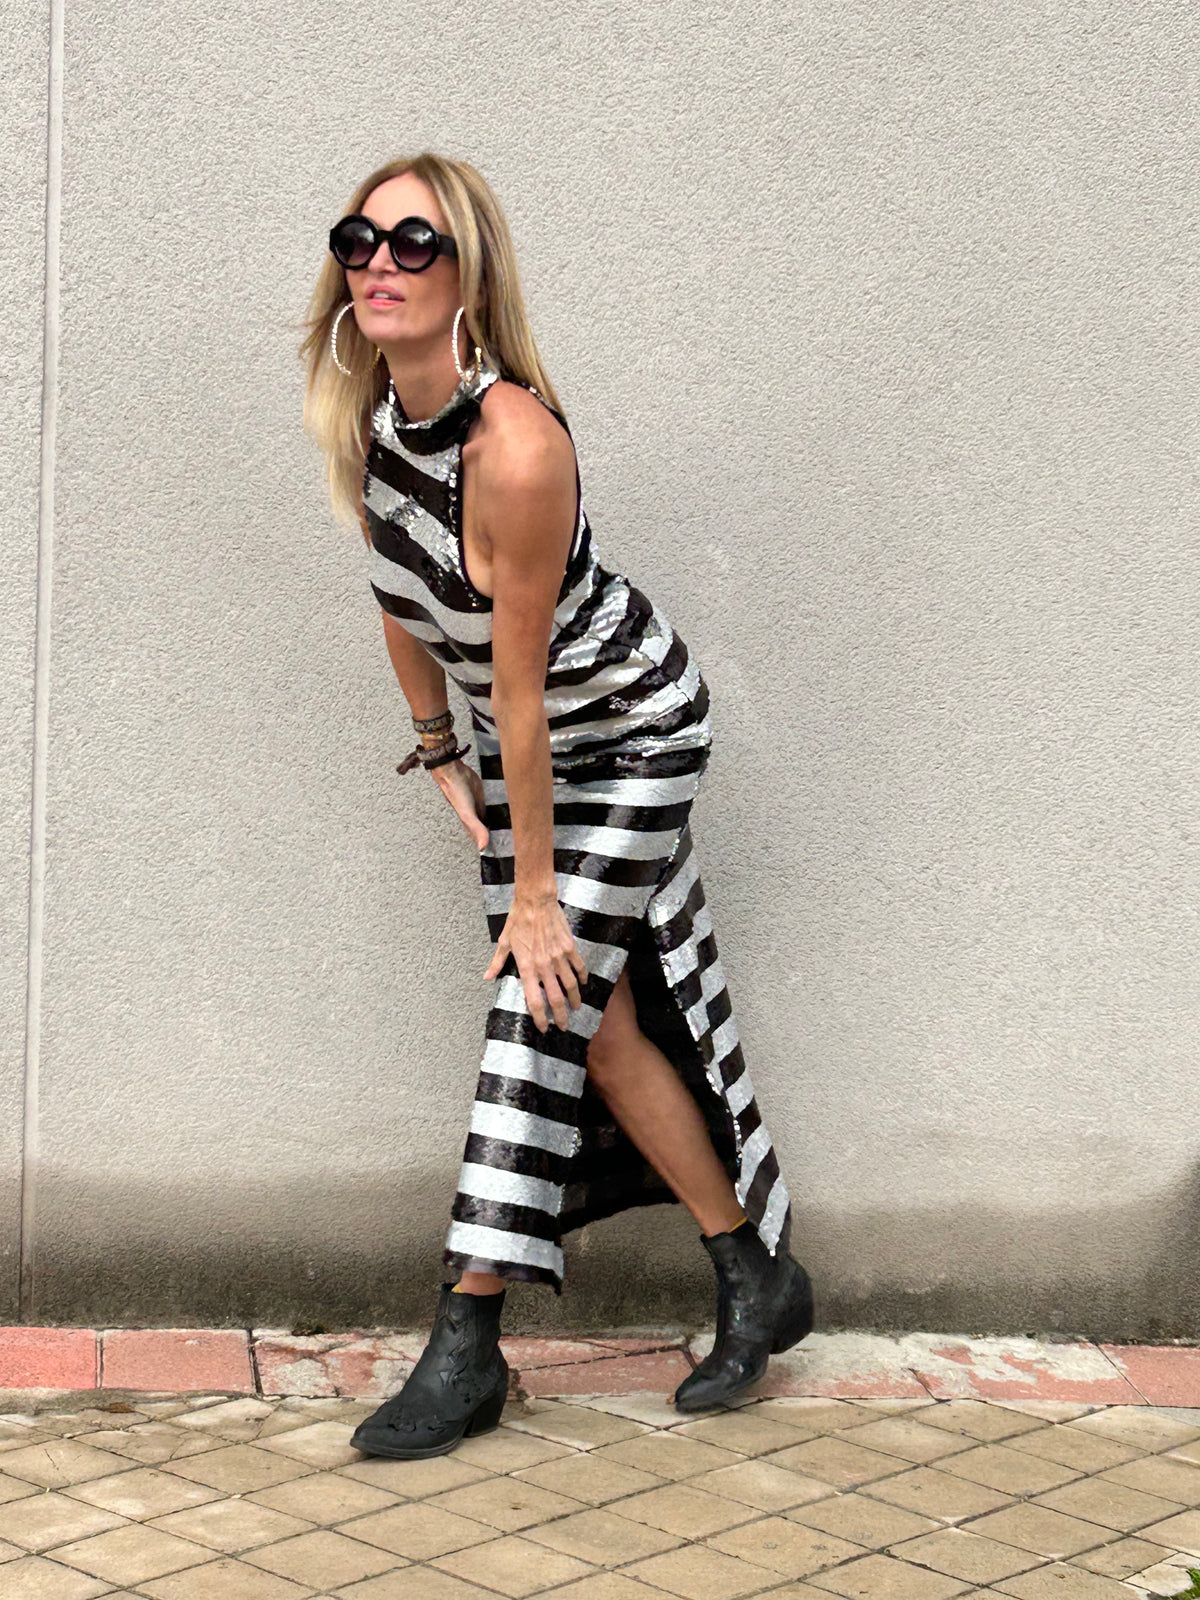 Long striped sequin dress